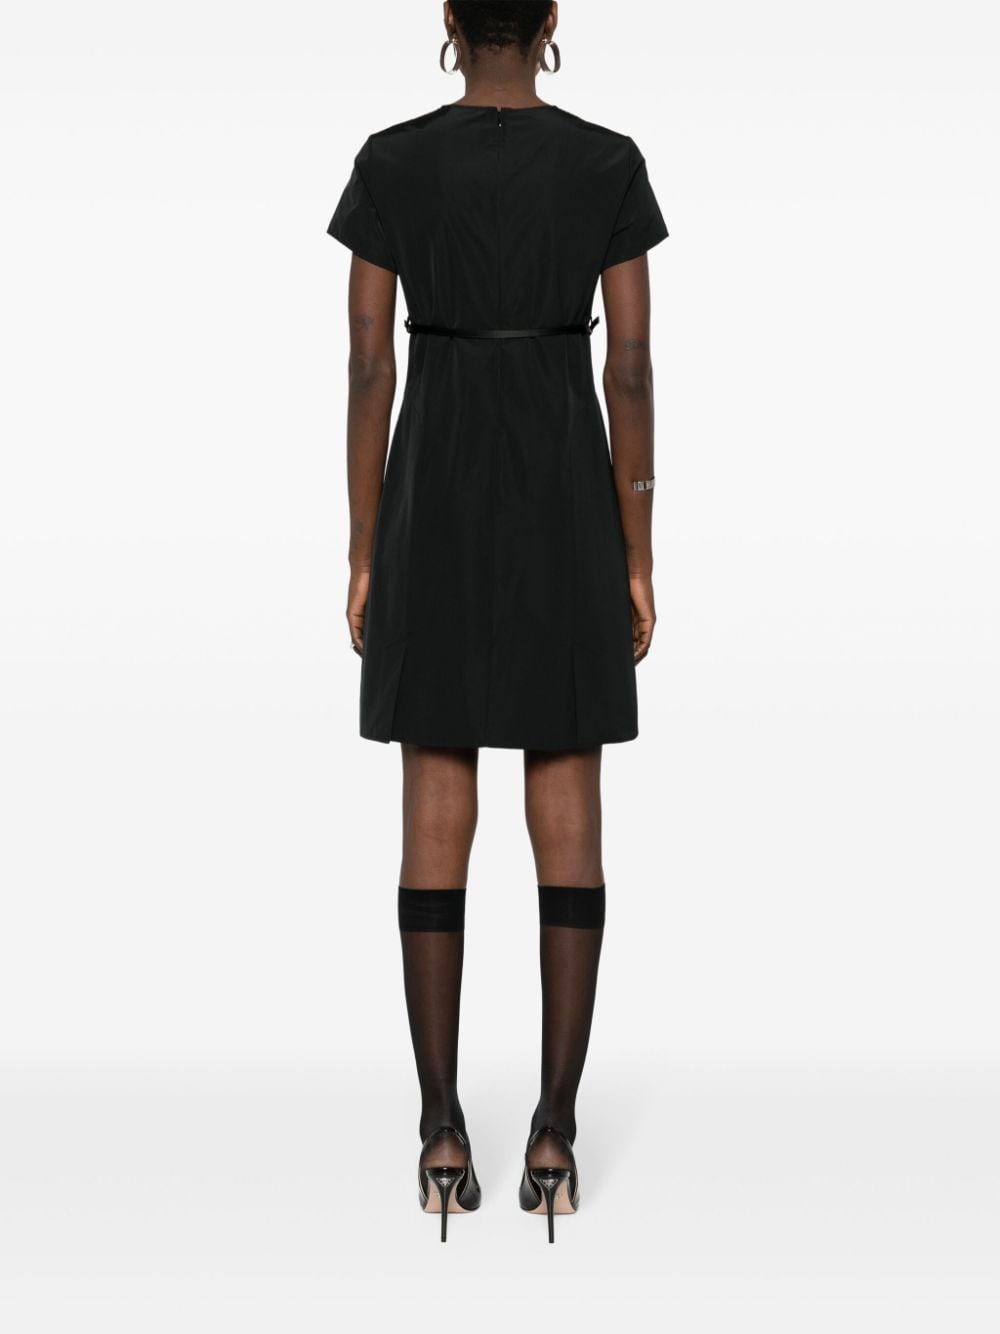 Shop Givenchy Feminine Black Mini Dress With Detachable Belt And Flared Skirt